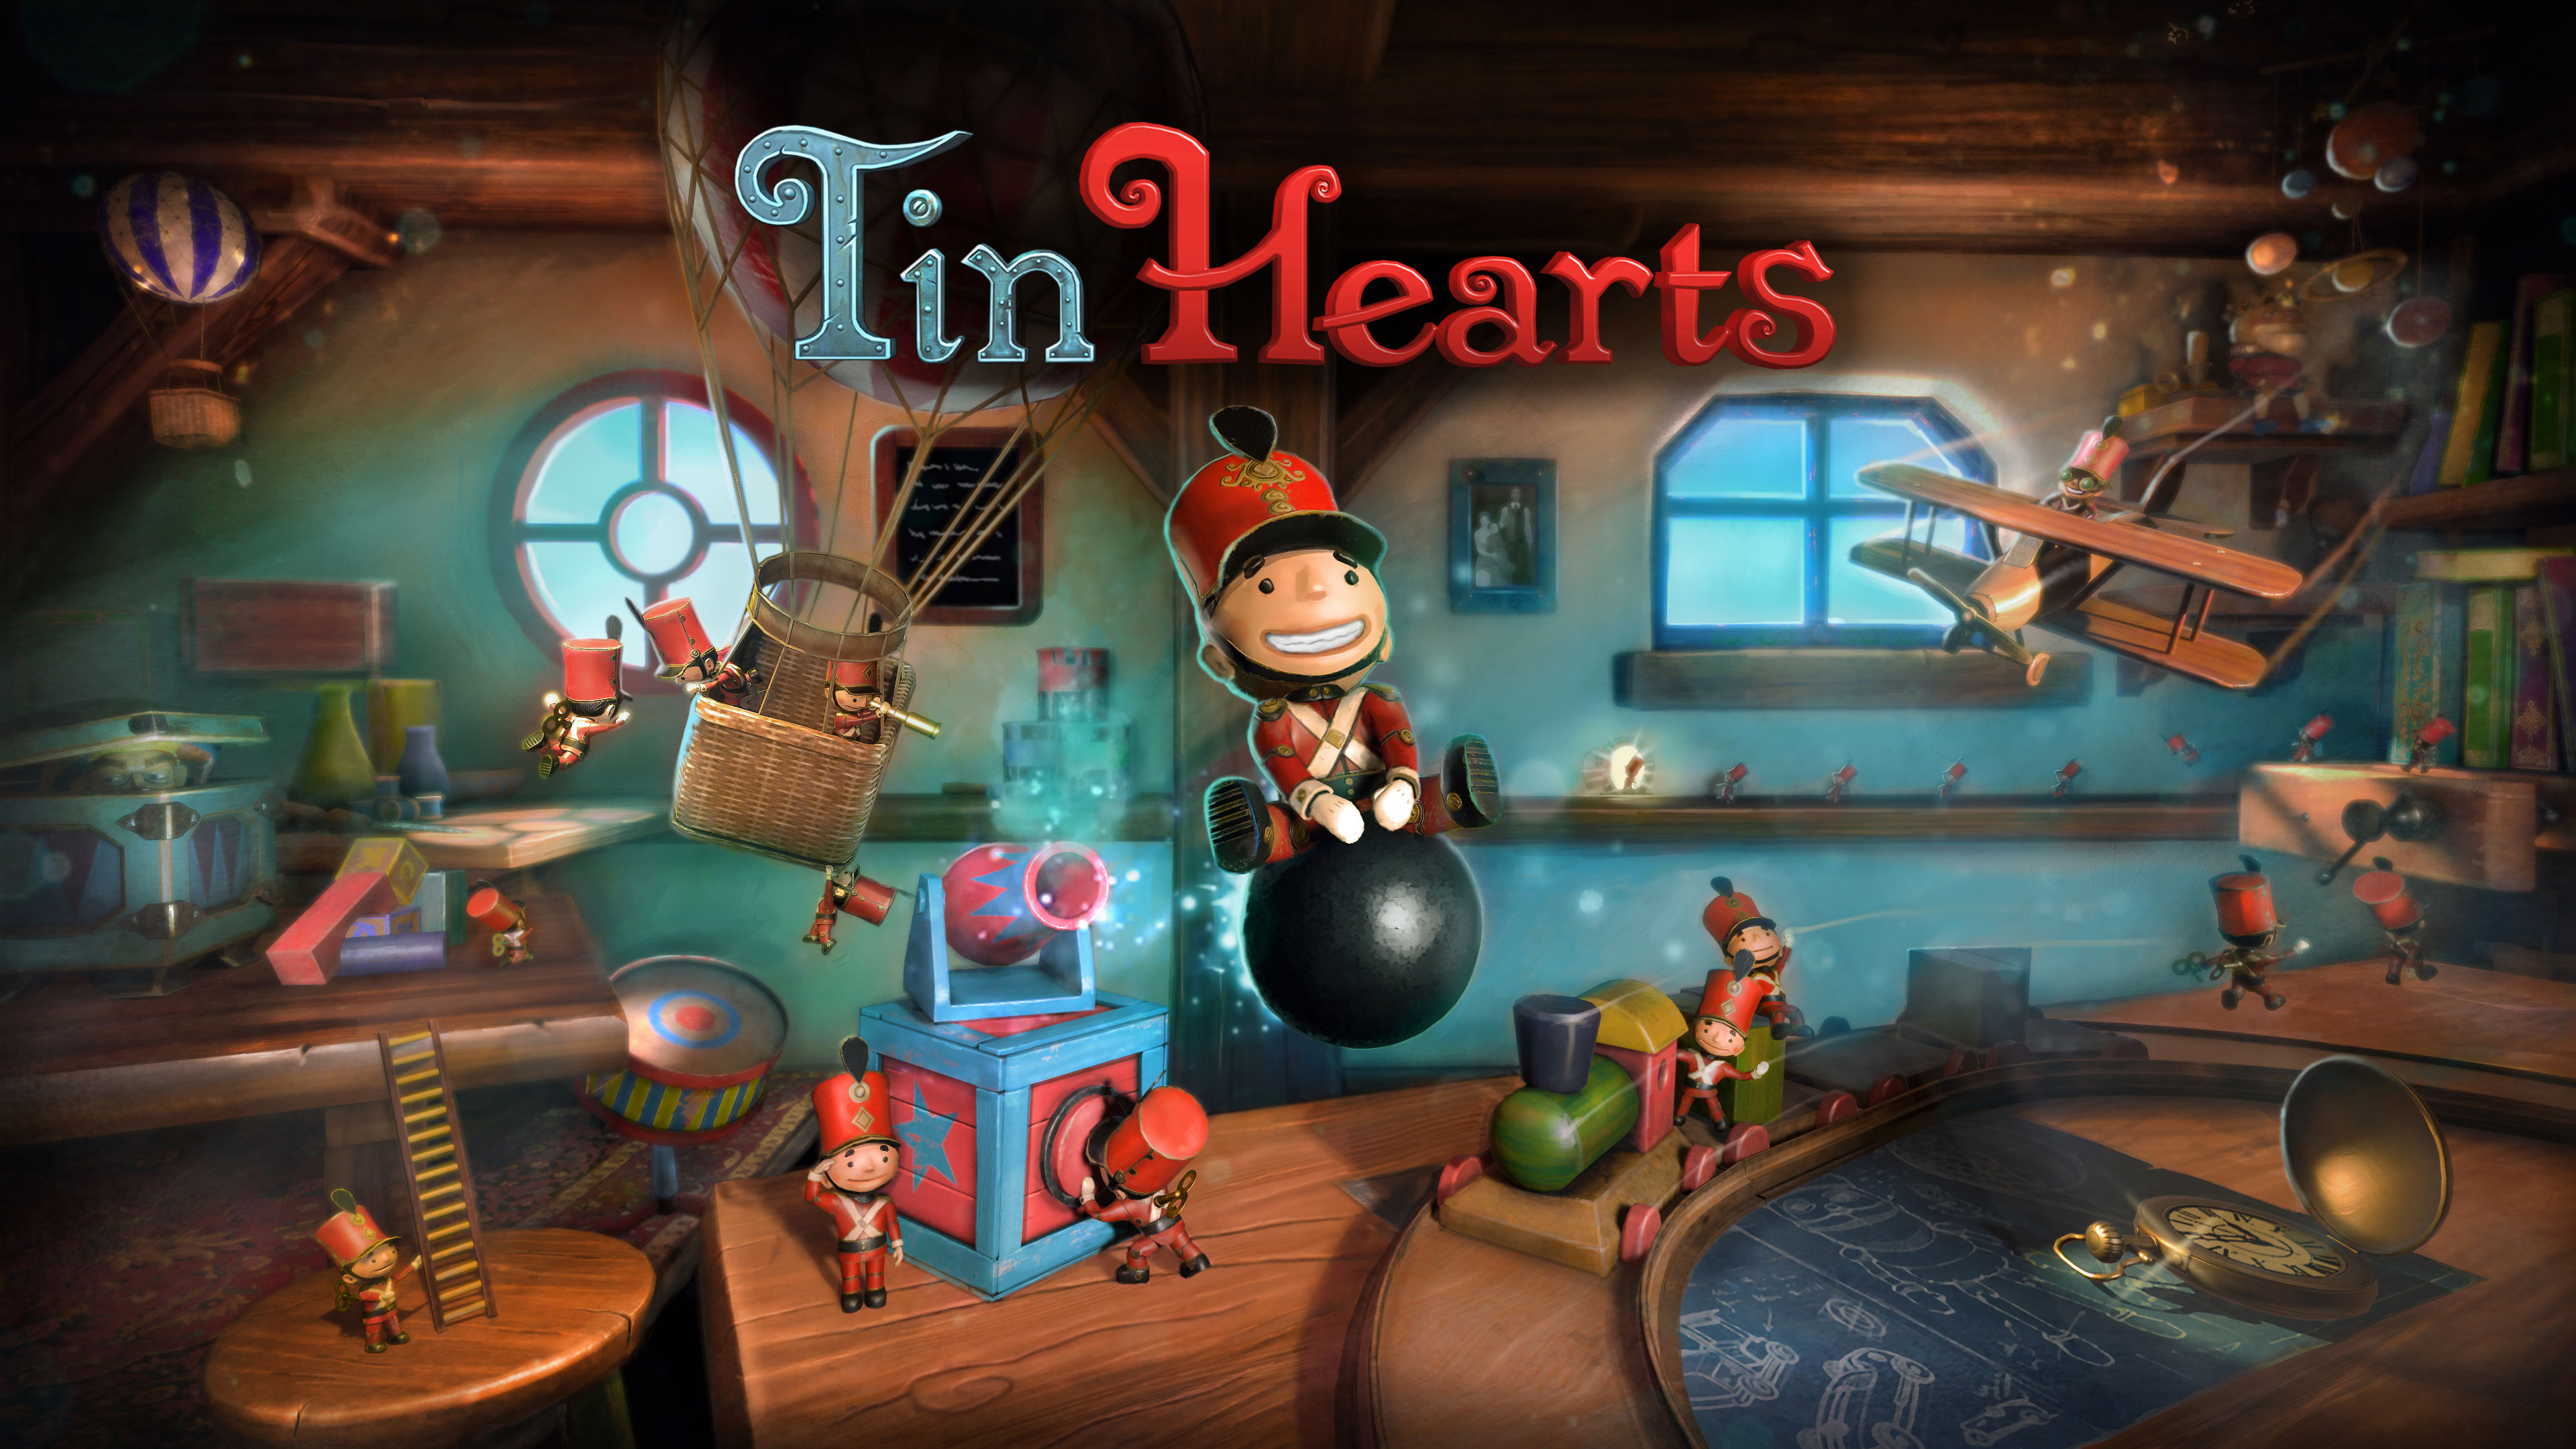 Tin hearts titled key art